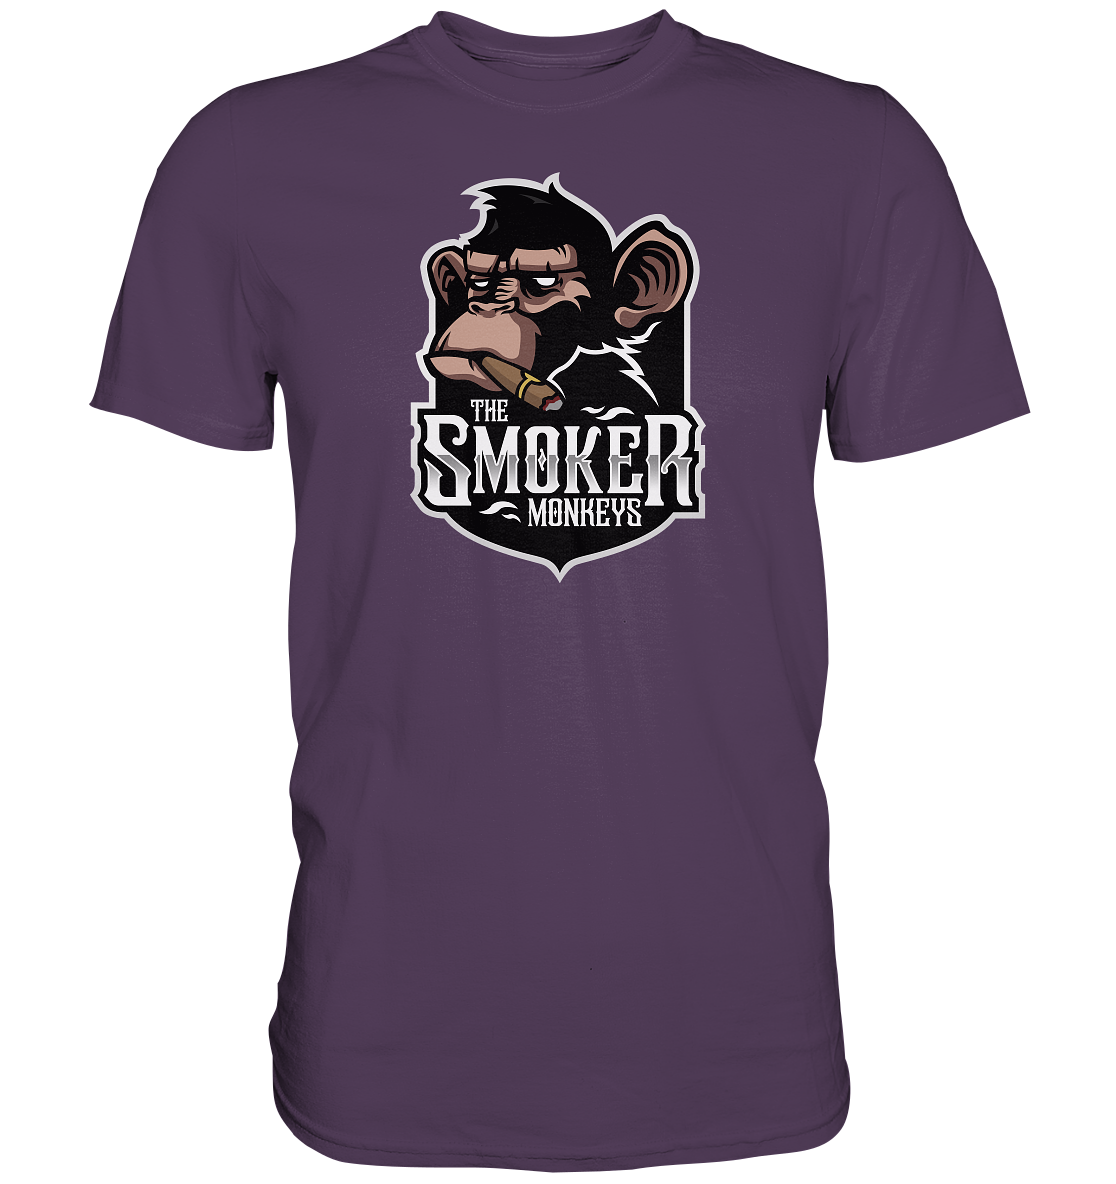 THE SMOKER MONKEYS - Basic Shirt